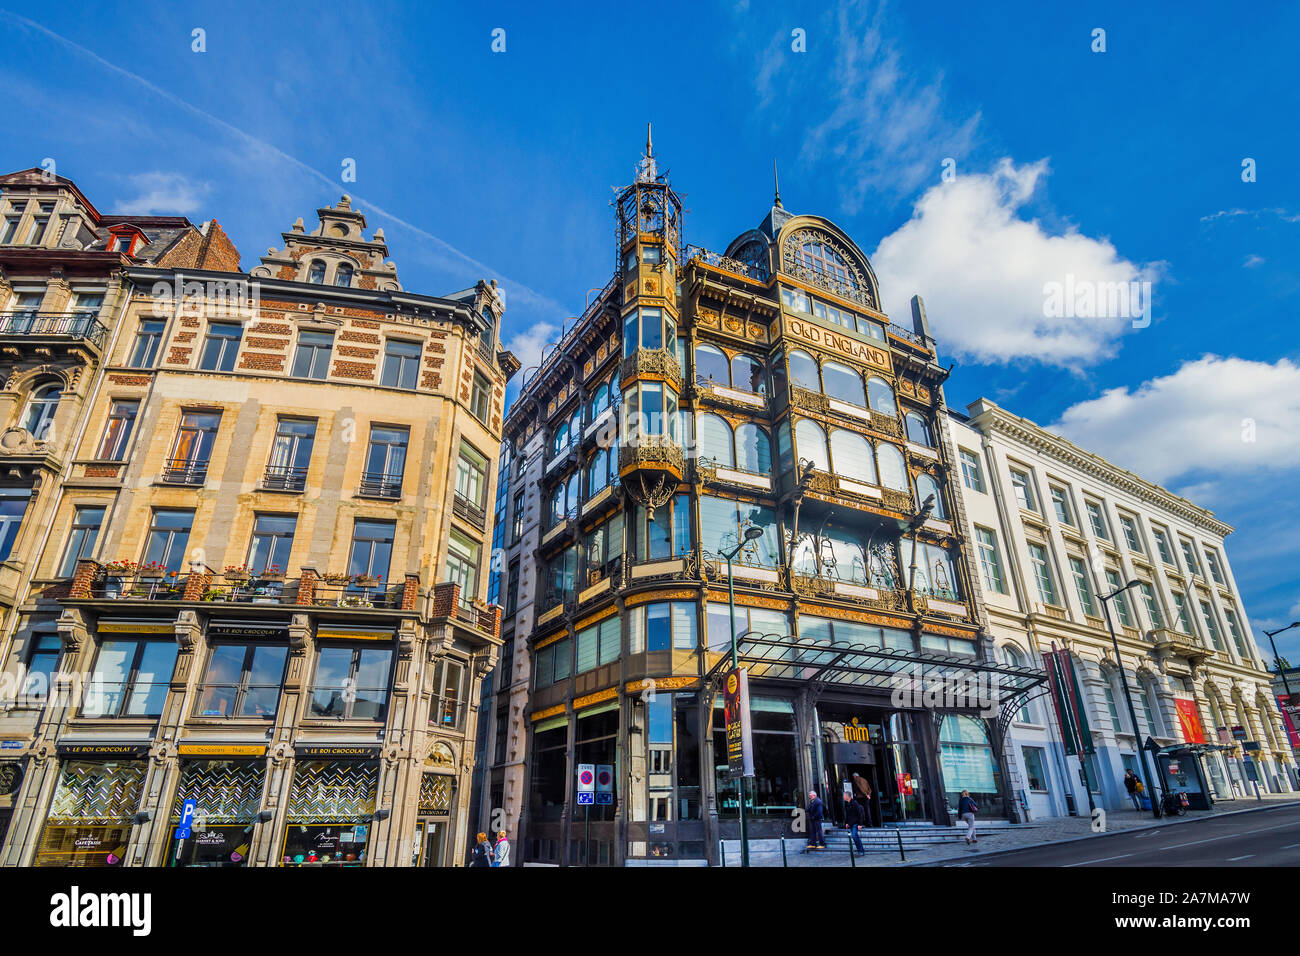 'Old England 'Art Nouveau (ehemaliges Kaufhaus) jetzt 'Museum der Musikinstrumente", Place Royale, Brüssel, Belgien. Stockfoto